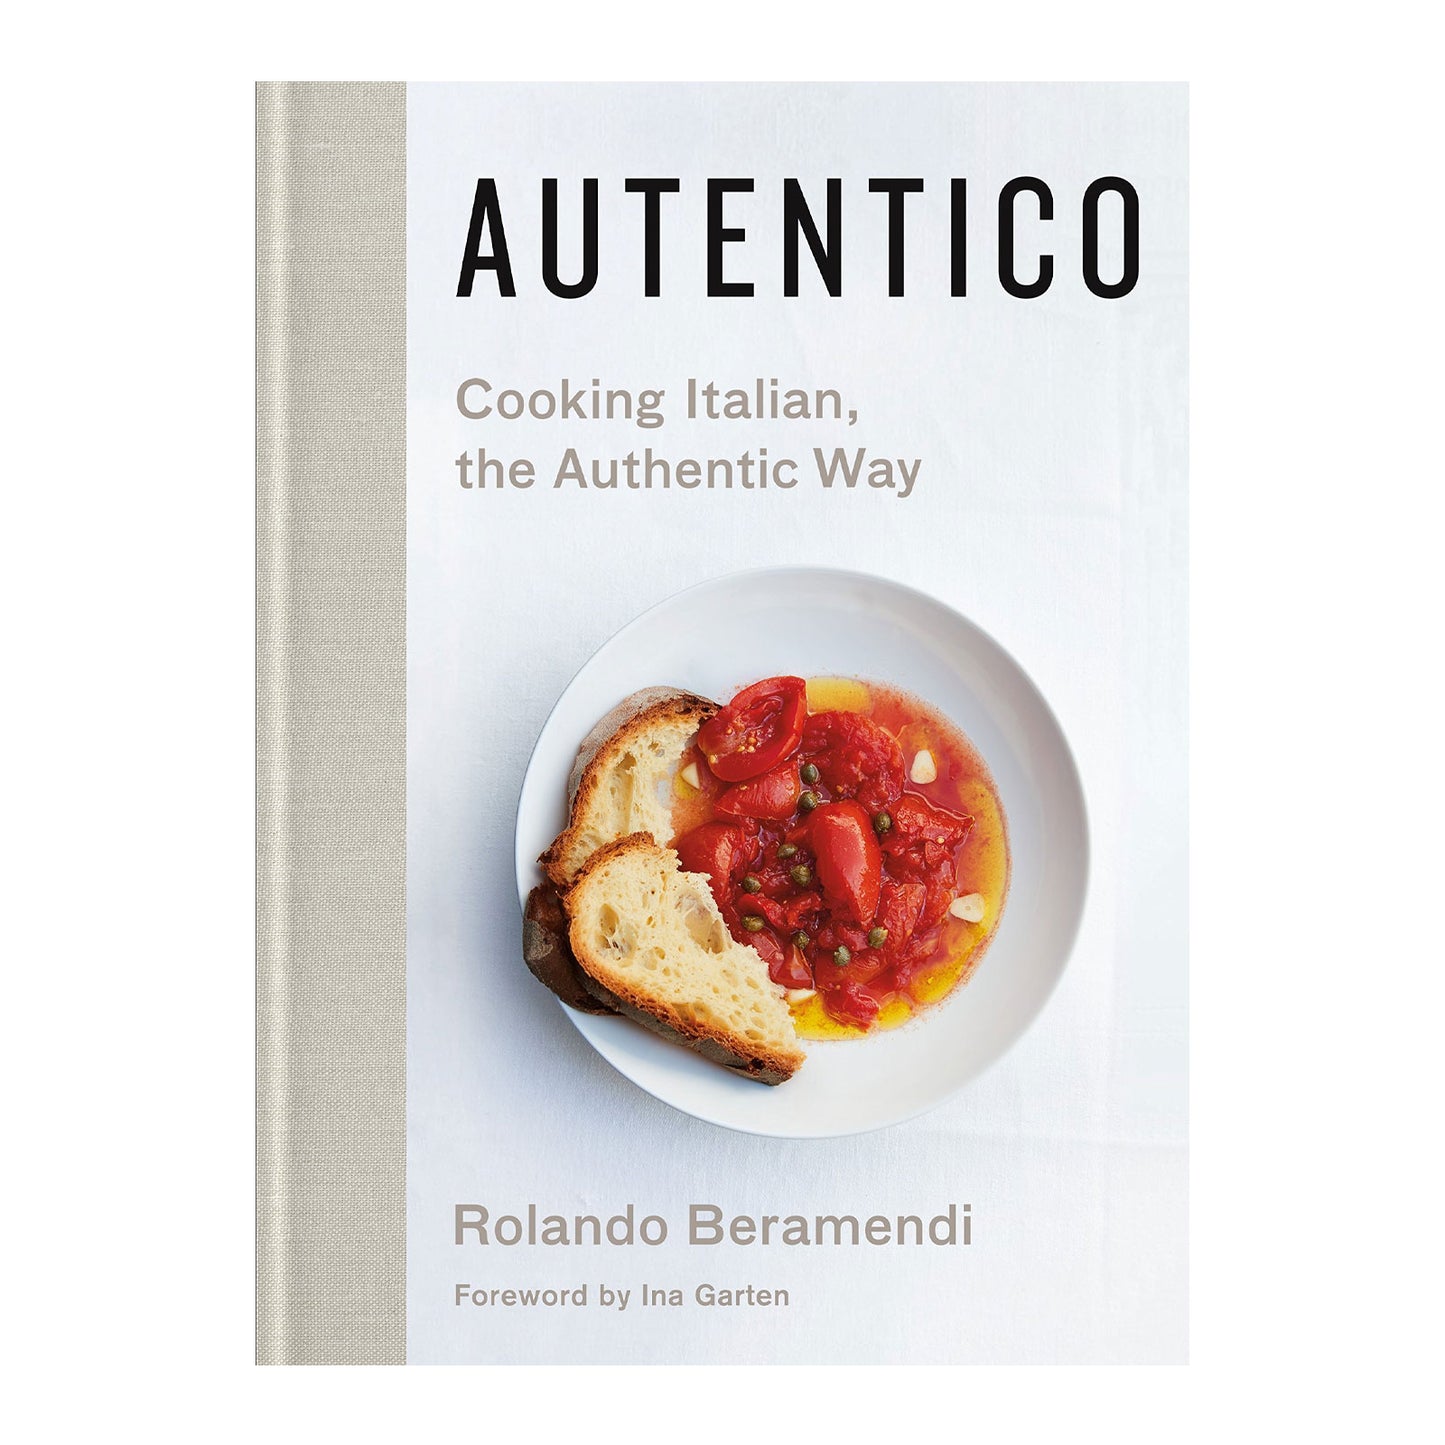 Autentico: Cooking Italian, the Authentic Way